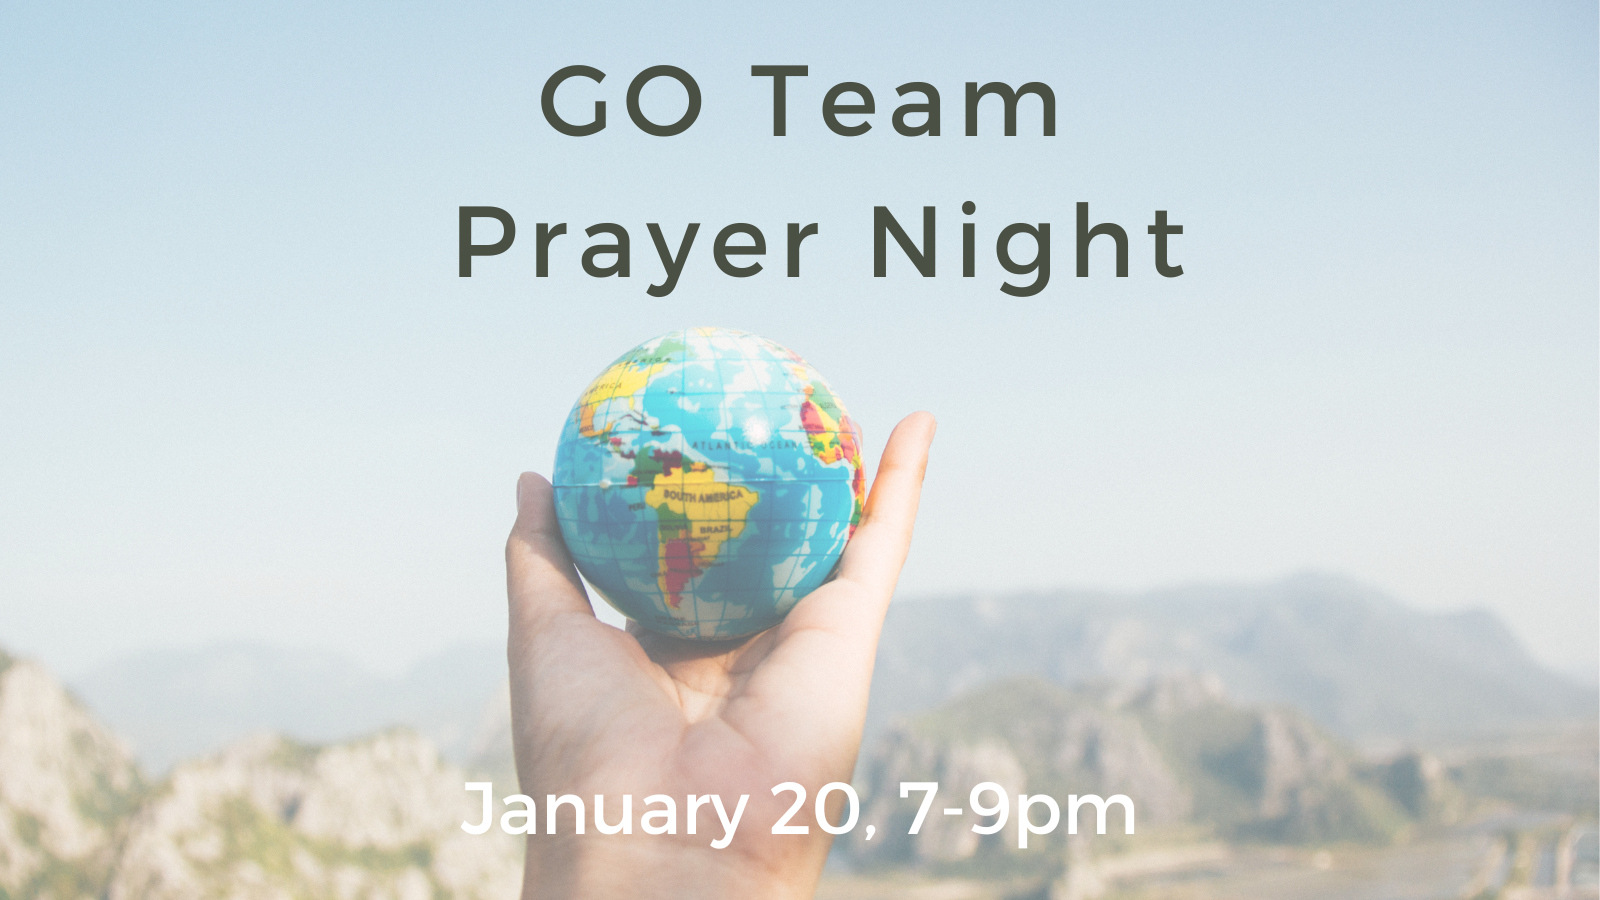 GO Team Prayer night 120 (1600 × 900 px) image